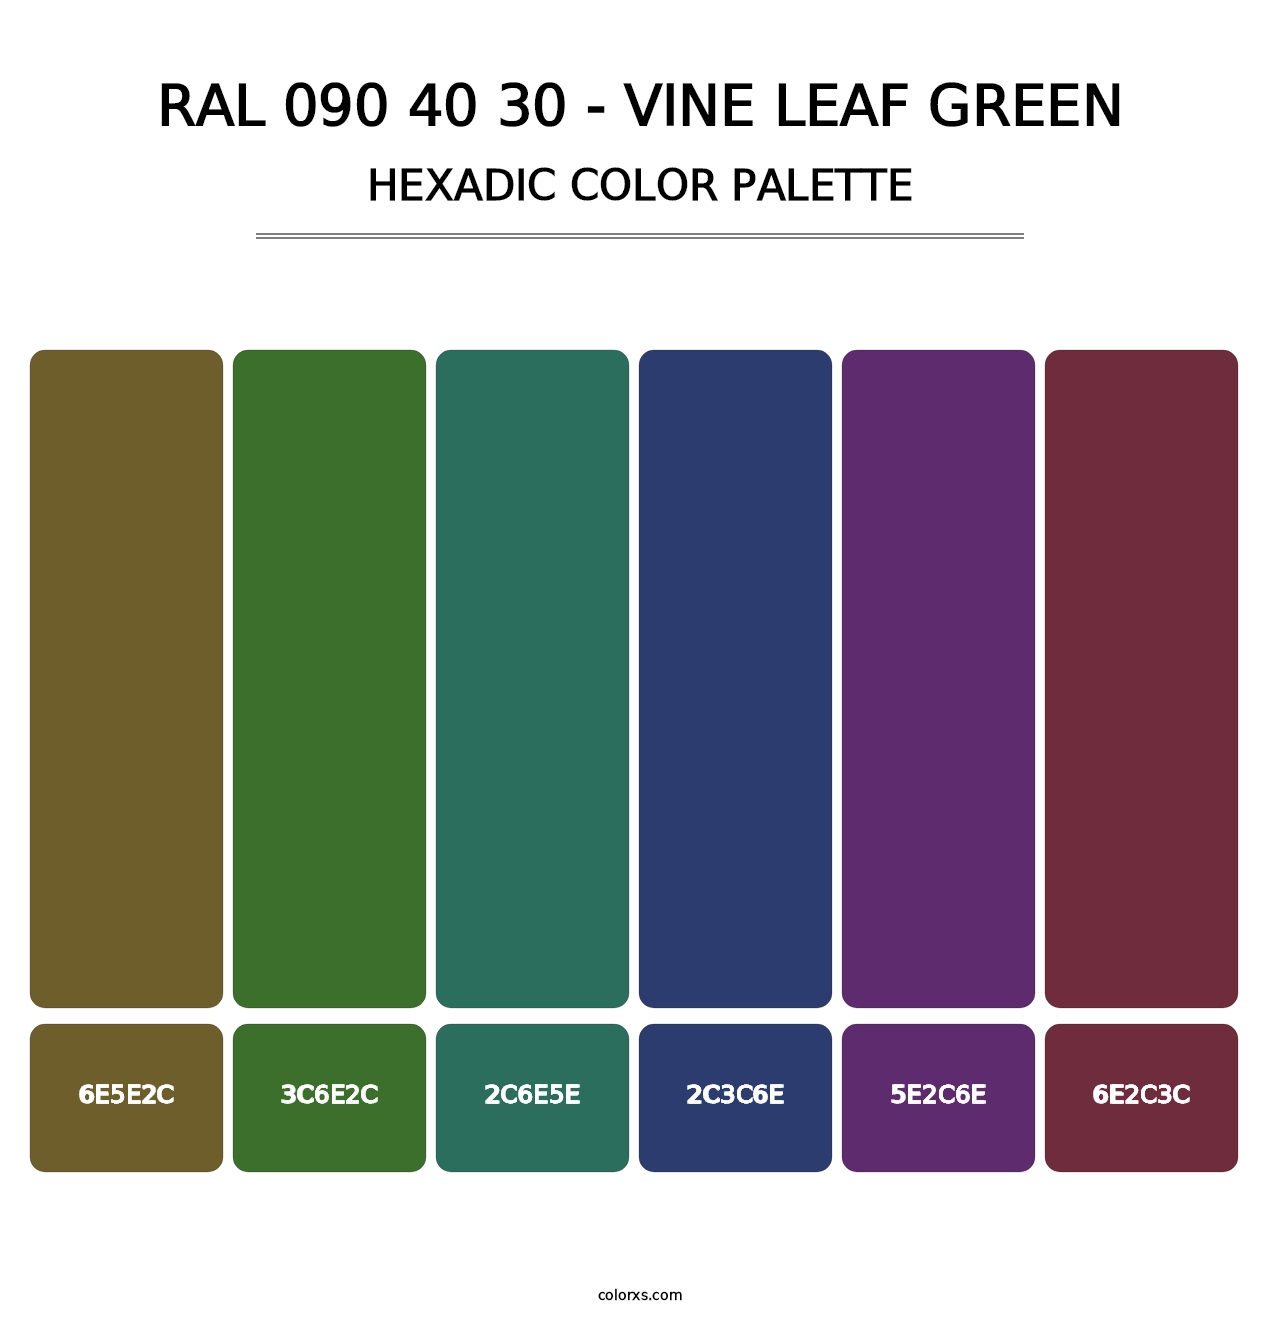 RAL 090 40 30 - Vine Leaf Green - Hexadic Color Palette